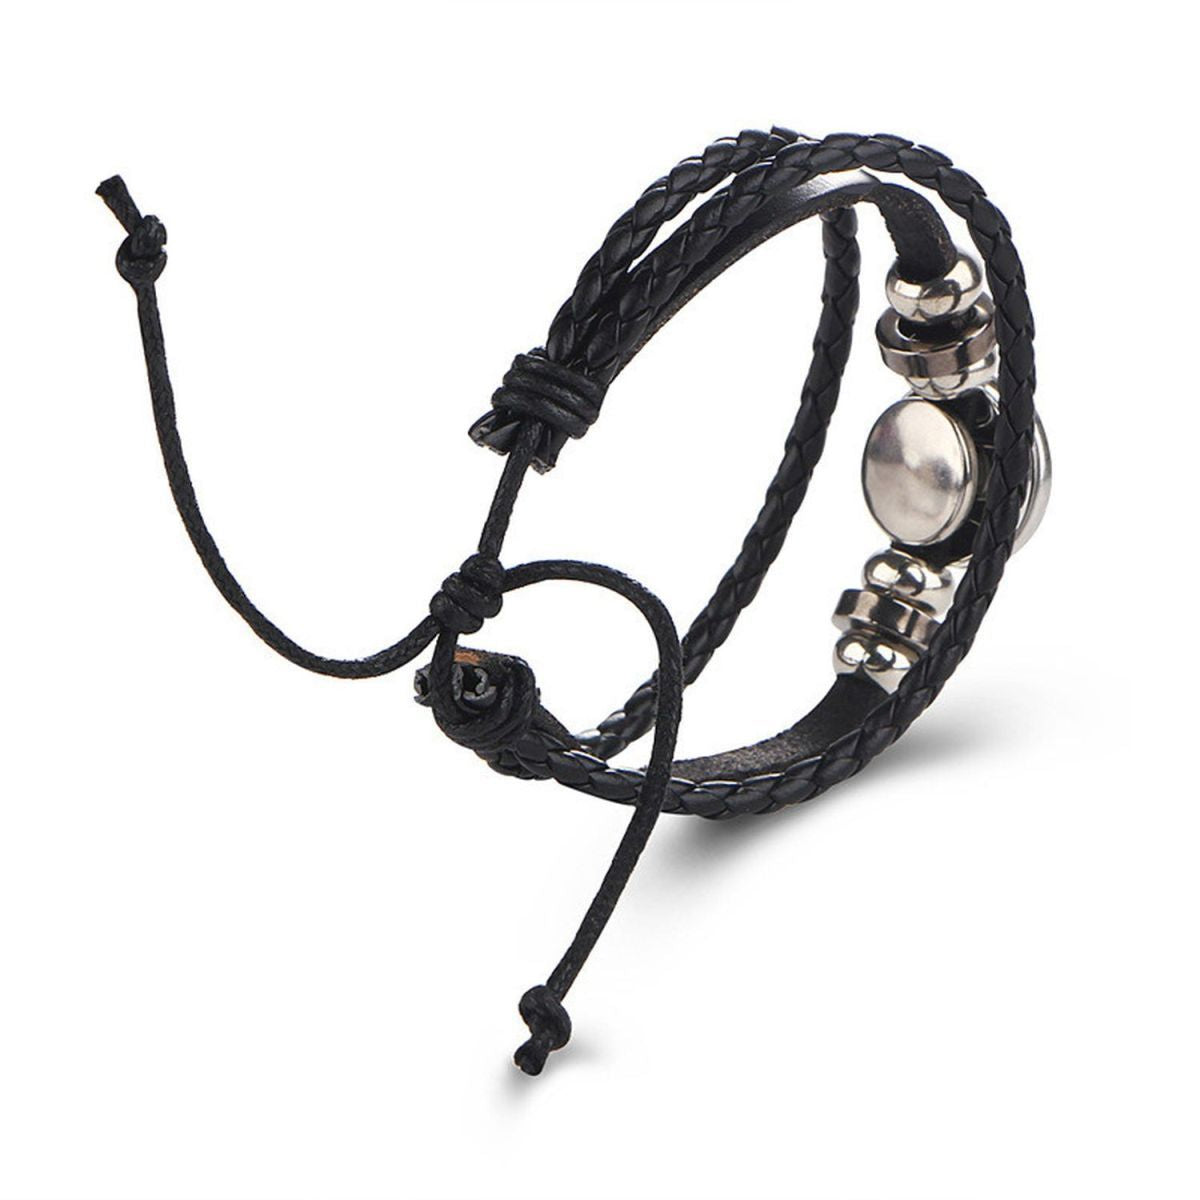 Leo Constellation Zodiac Star Leather Wrist Band Strand Bracelet